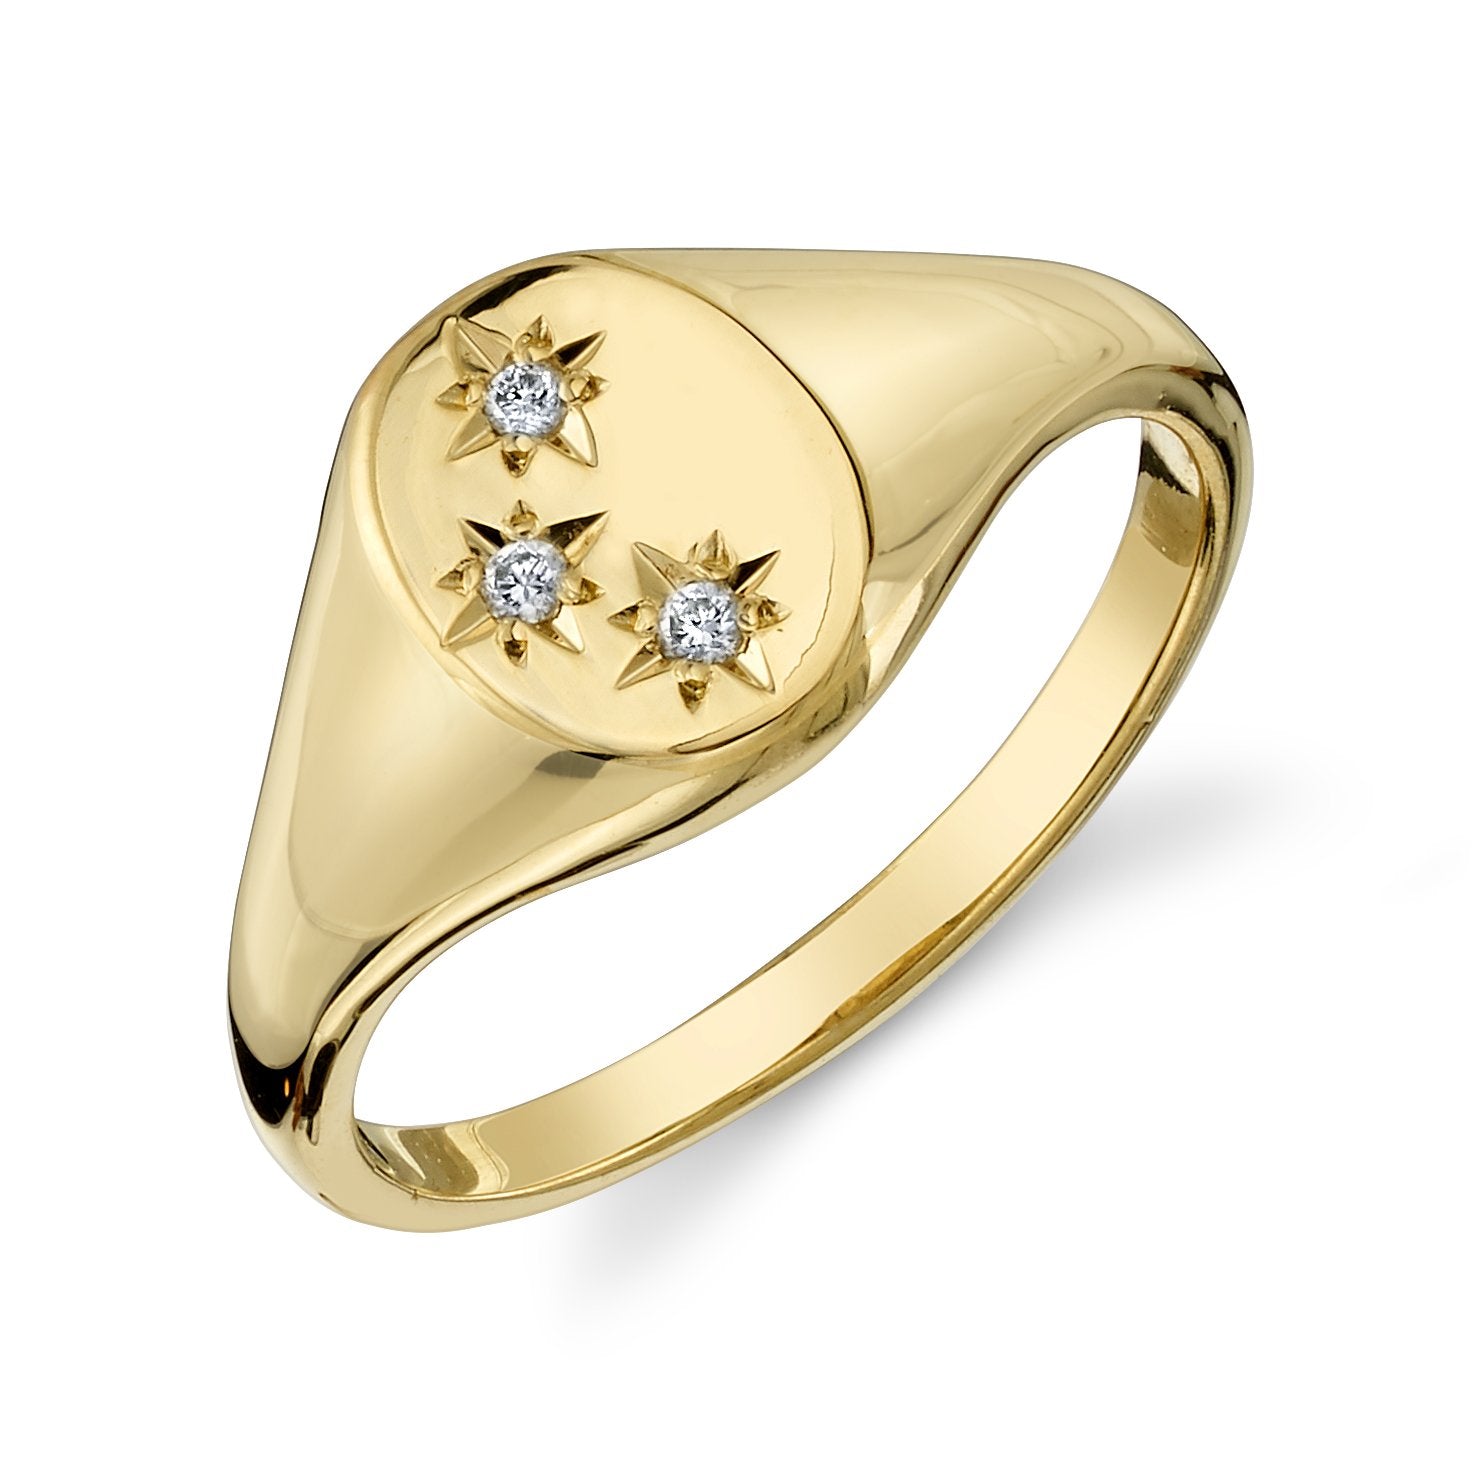 THREE STAR SIGNET RING - Sentimental Everyday Fine Jewelry